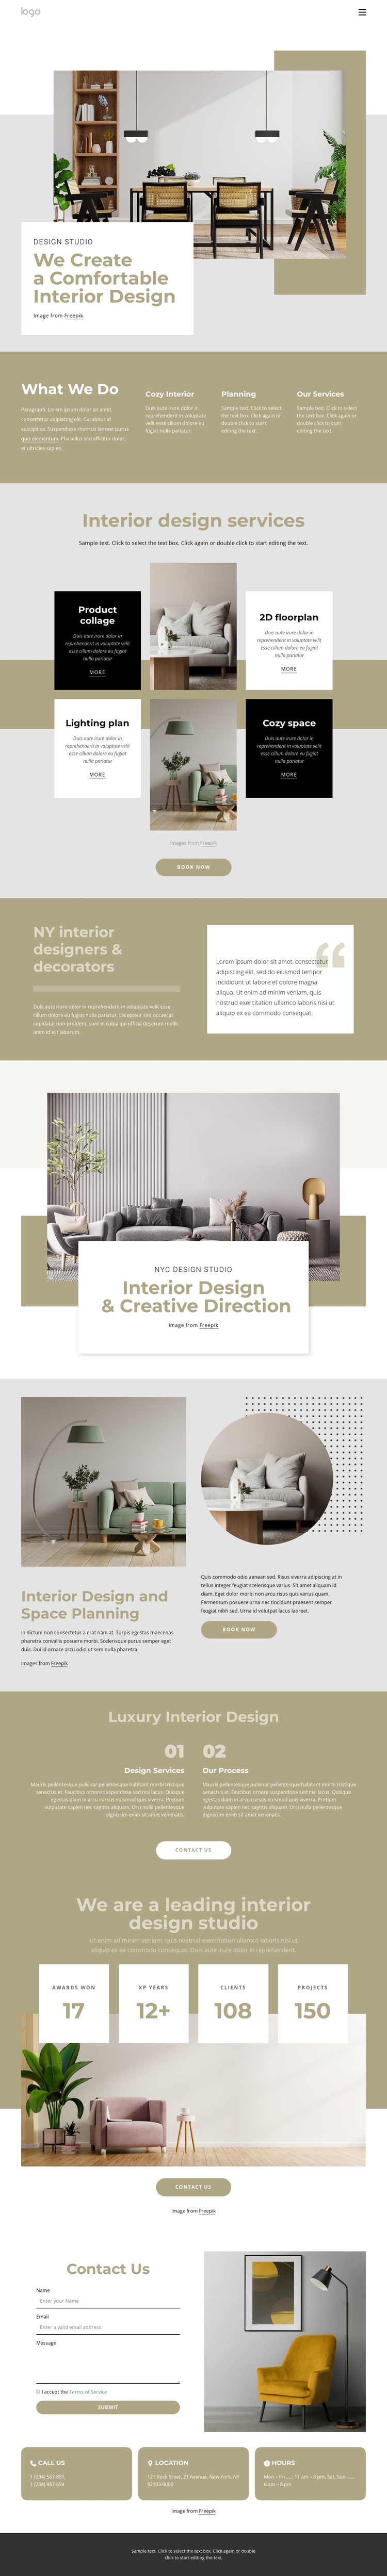 We create a comfortable interiors Joomla Template